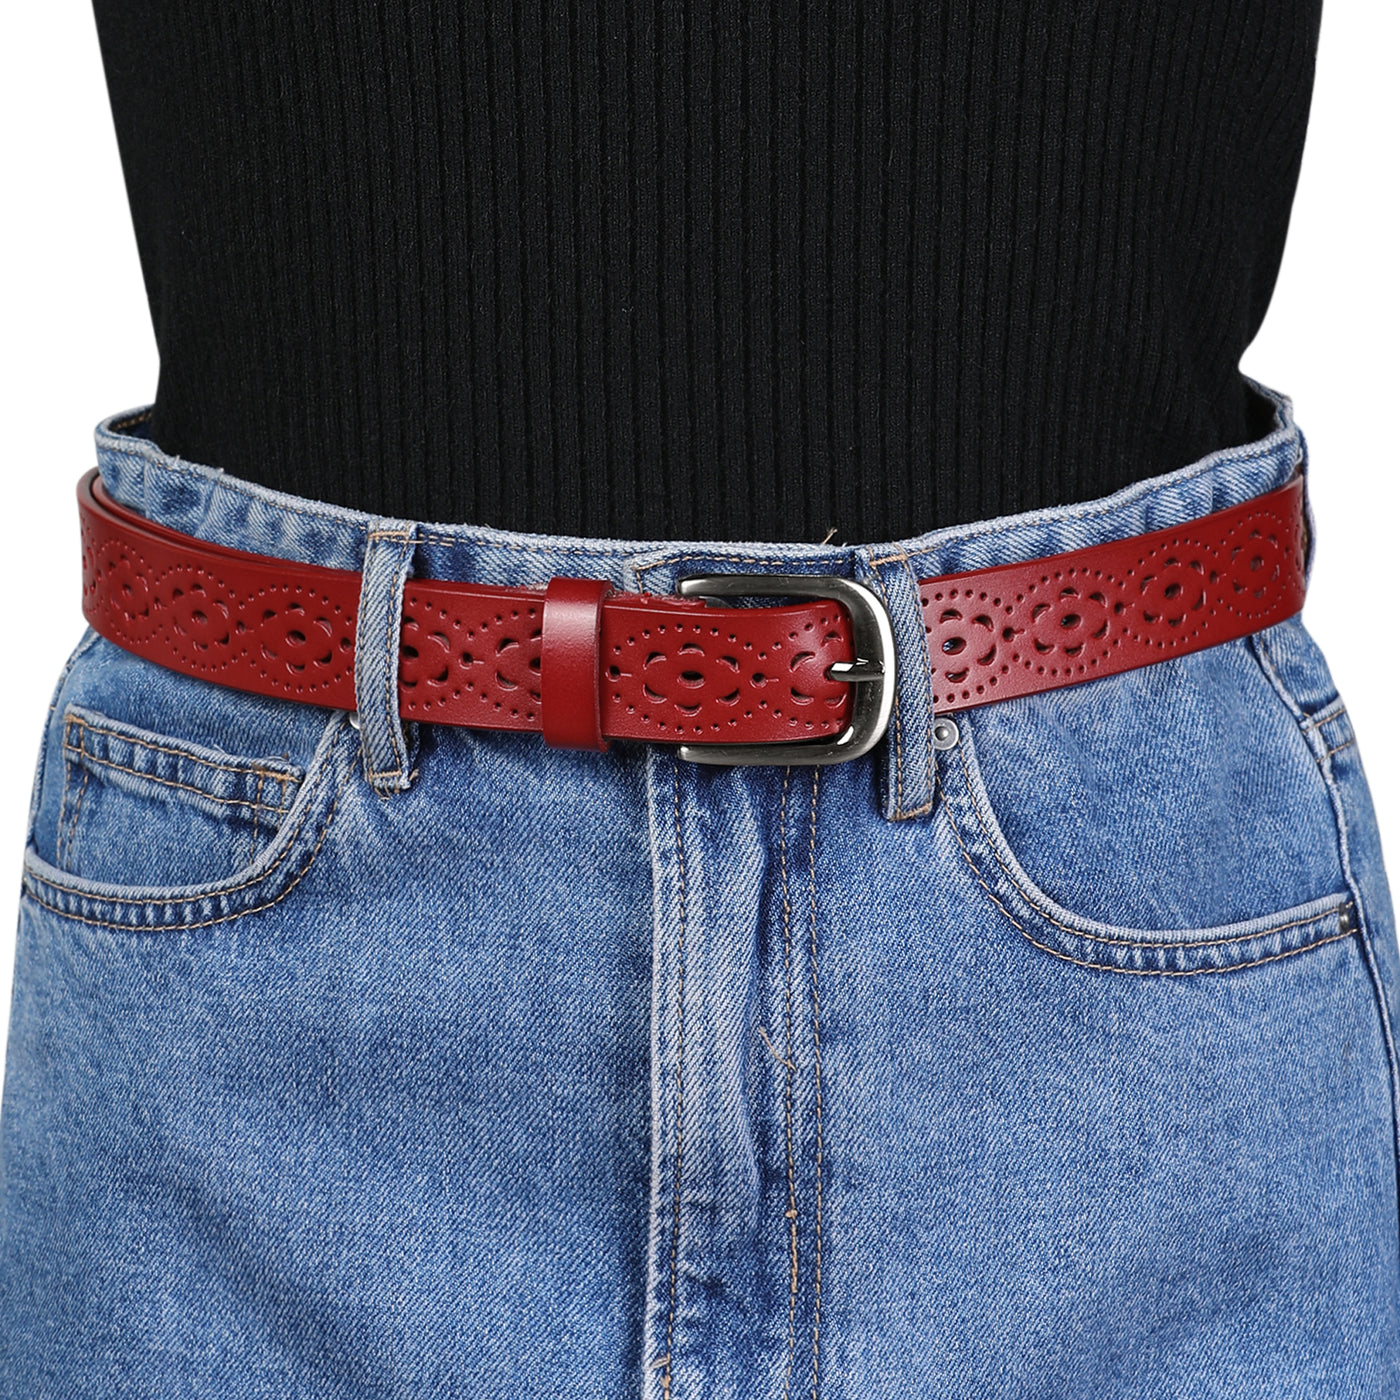 Allegra K Unisex Retro Floral Hollow Belts Pin Buckle Faux Leather Belts for Jeans Pants